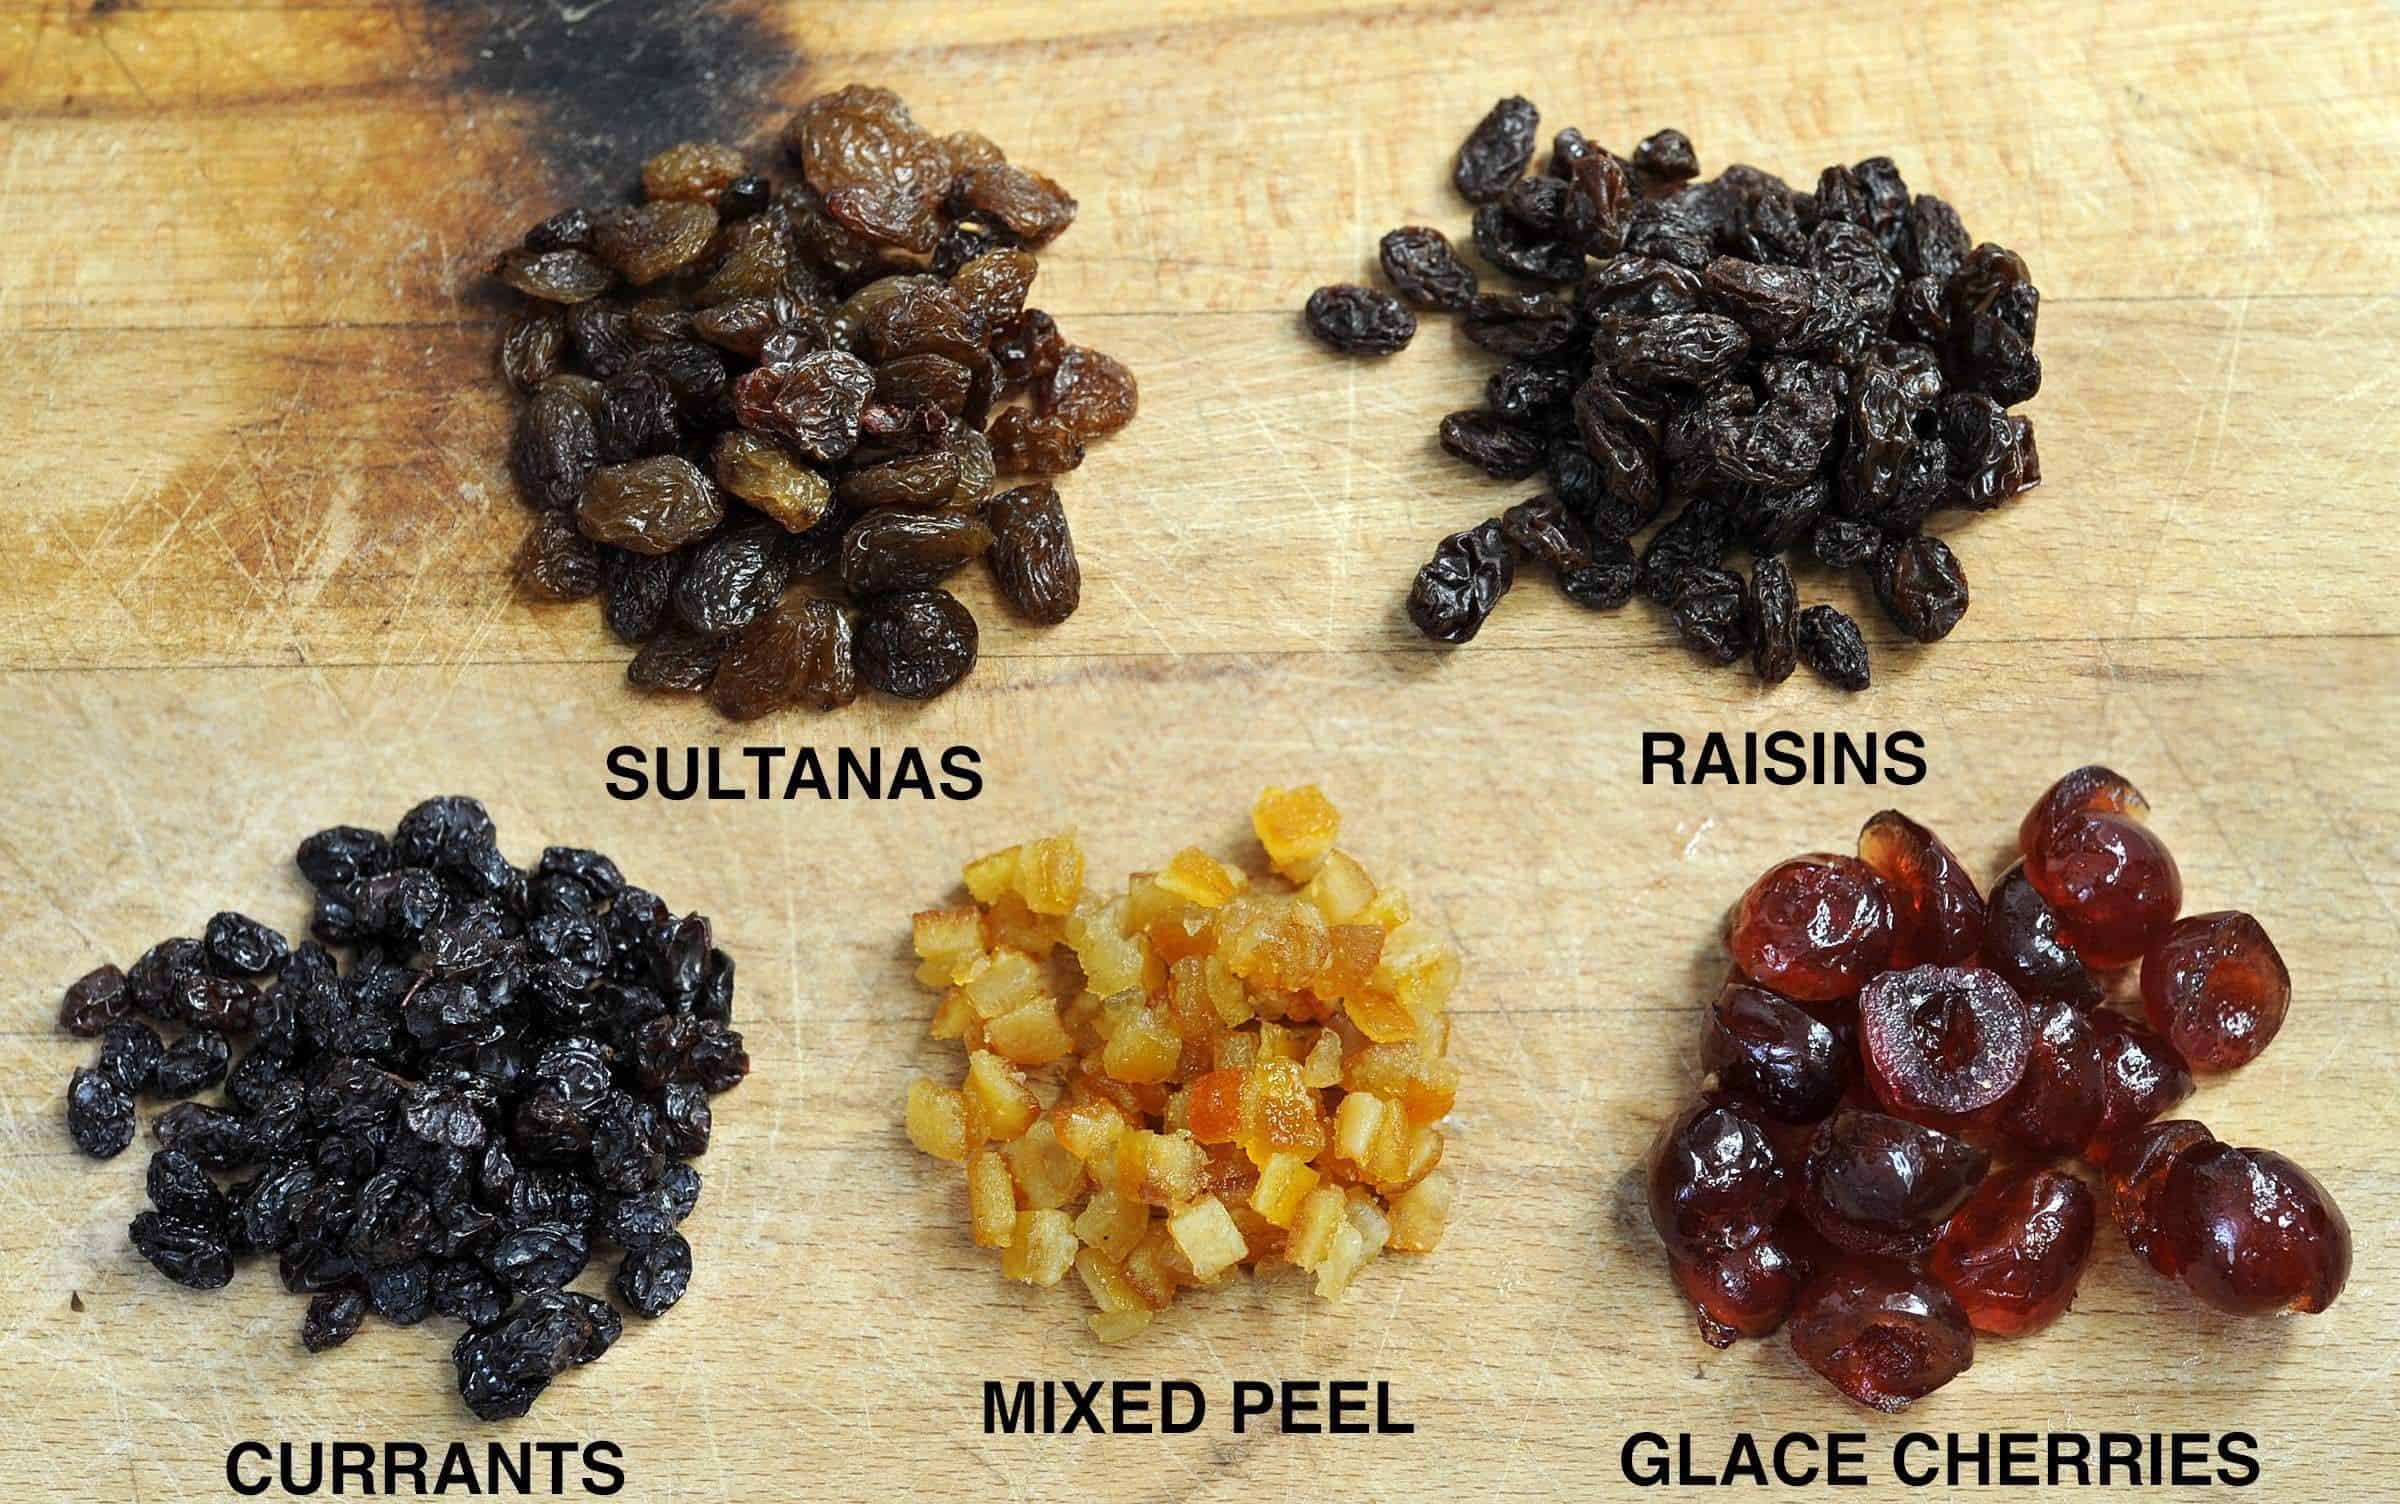 Raisins, Currants, and Dried Fruits